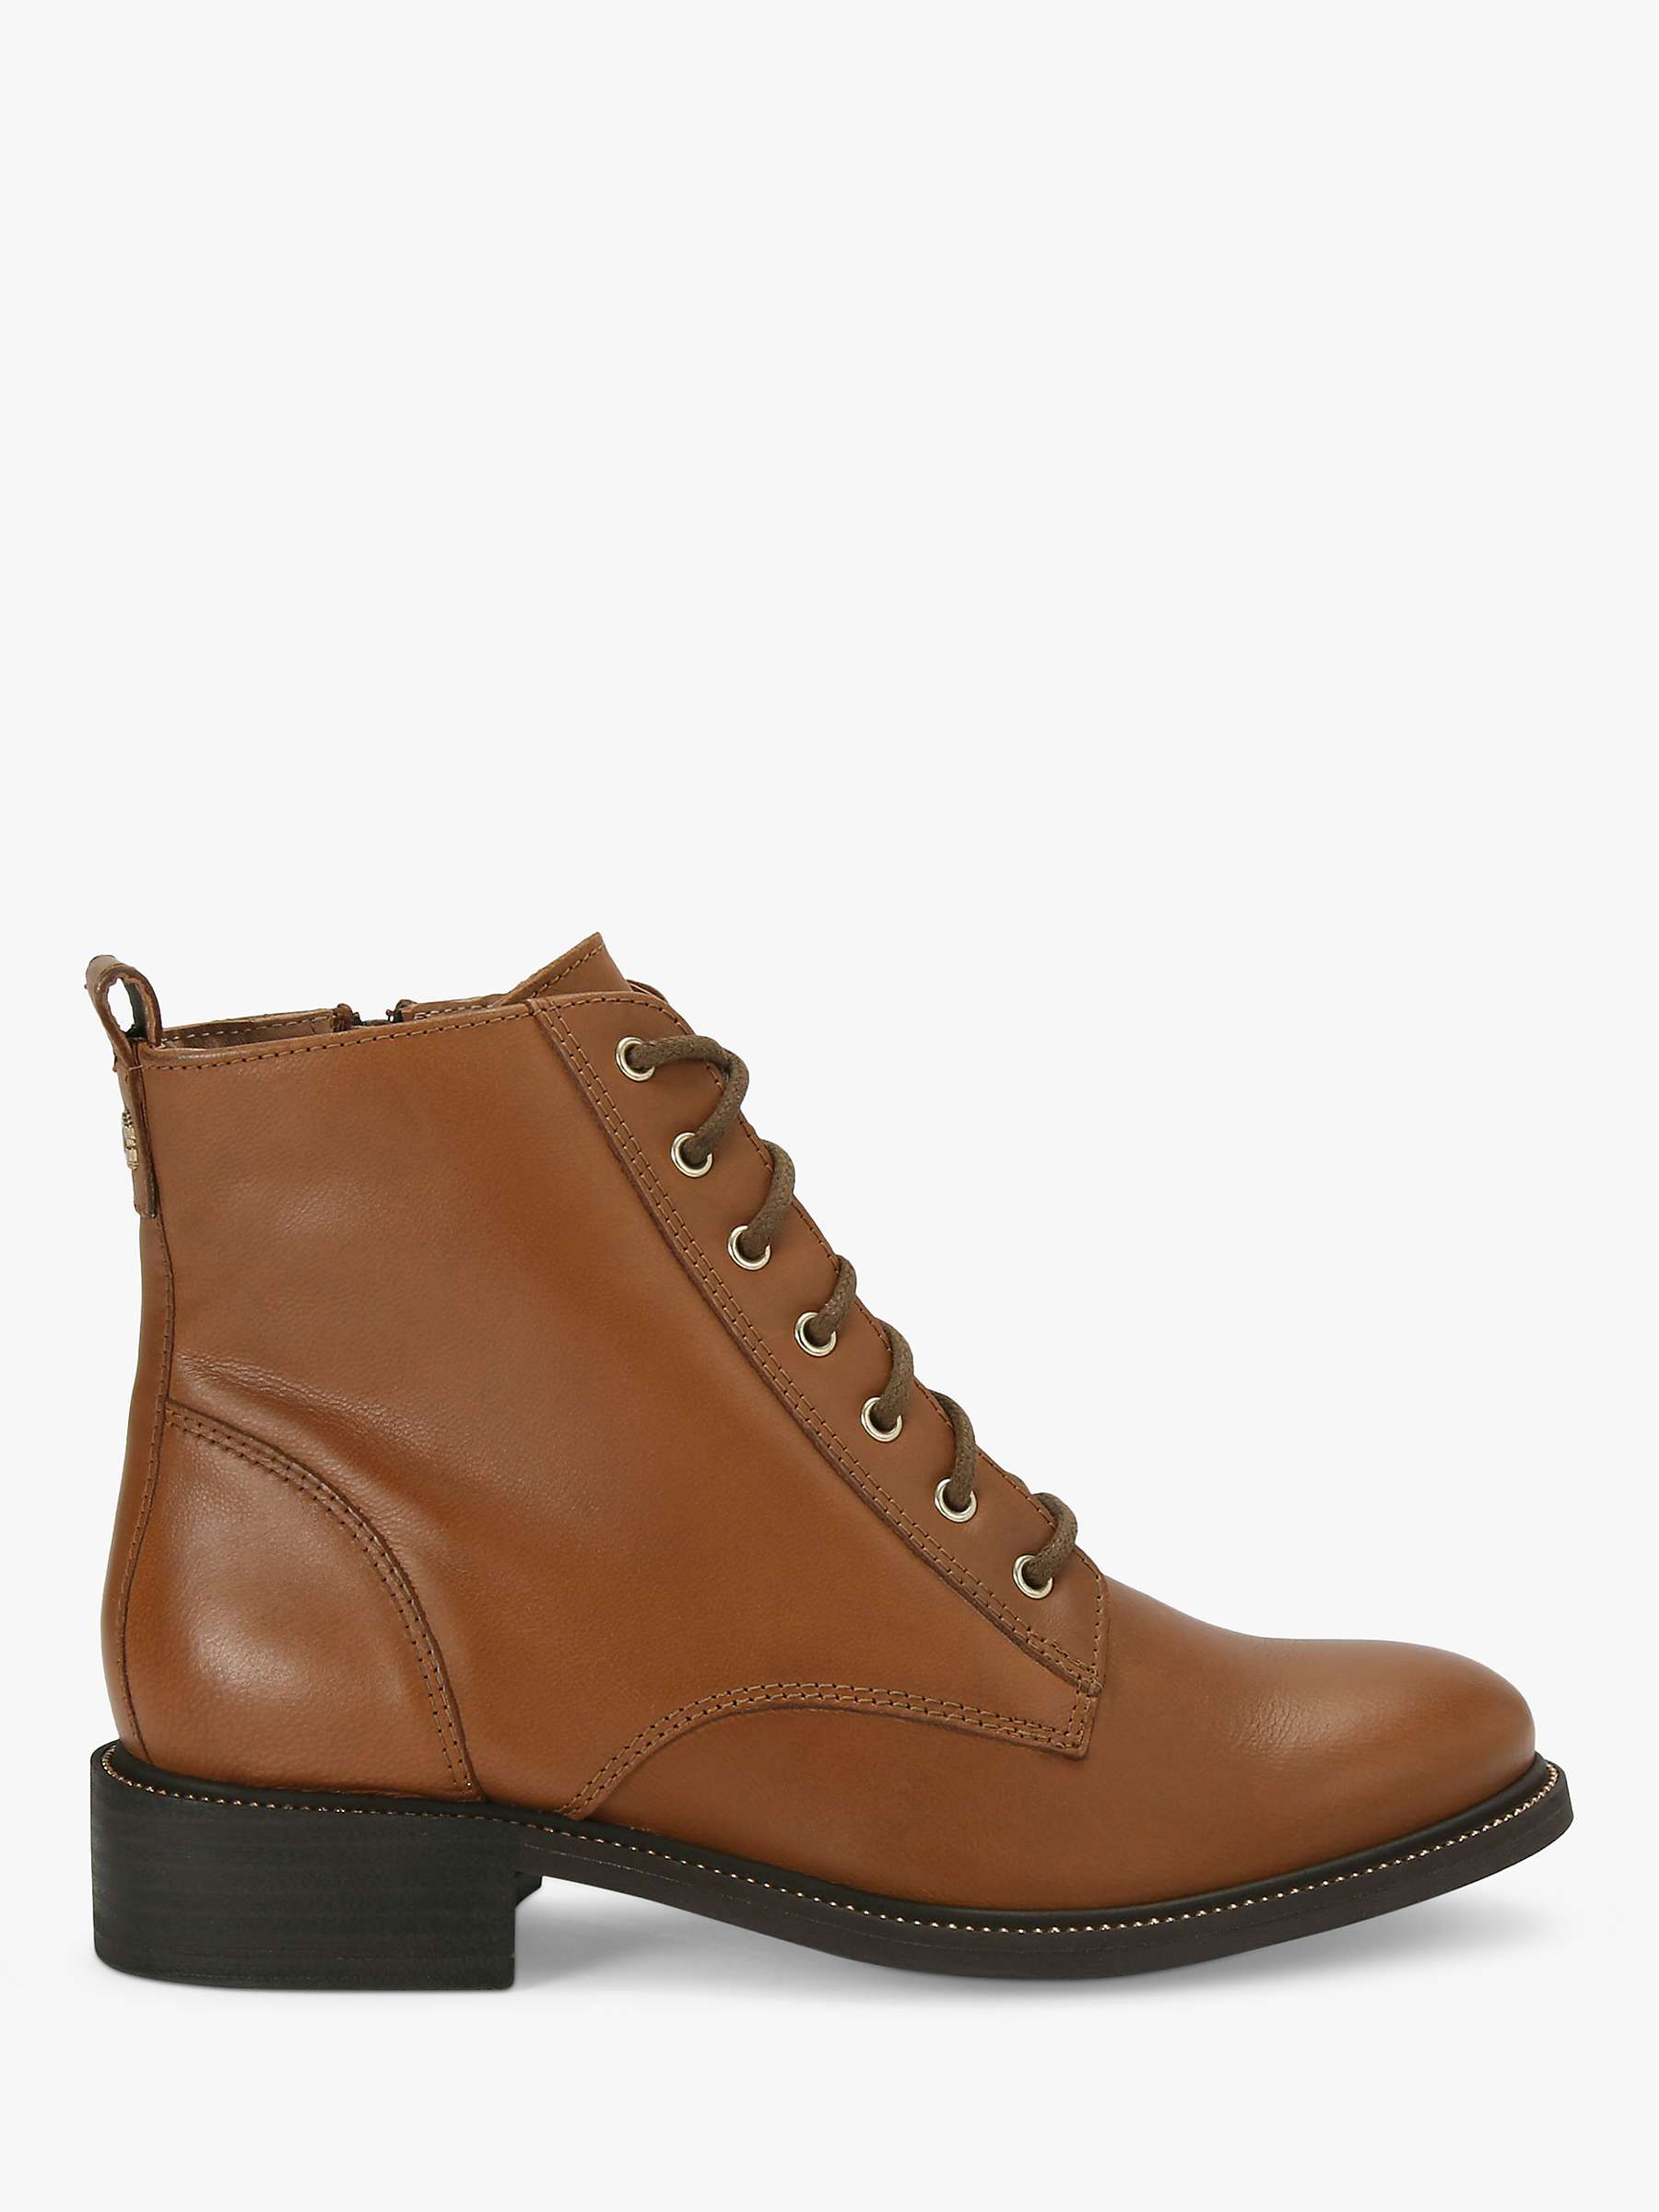 Buy Carvela Spike Stud Detail Leather Ankle Boots, Brown Tan Online at johnlewis.com